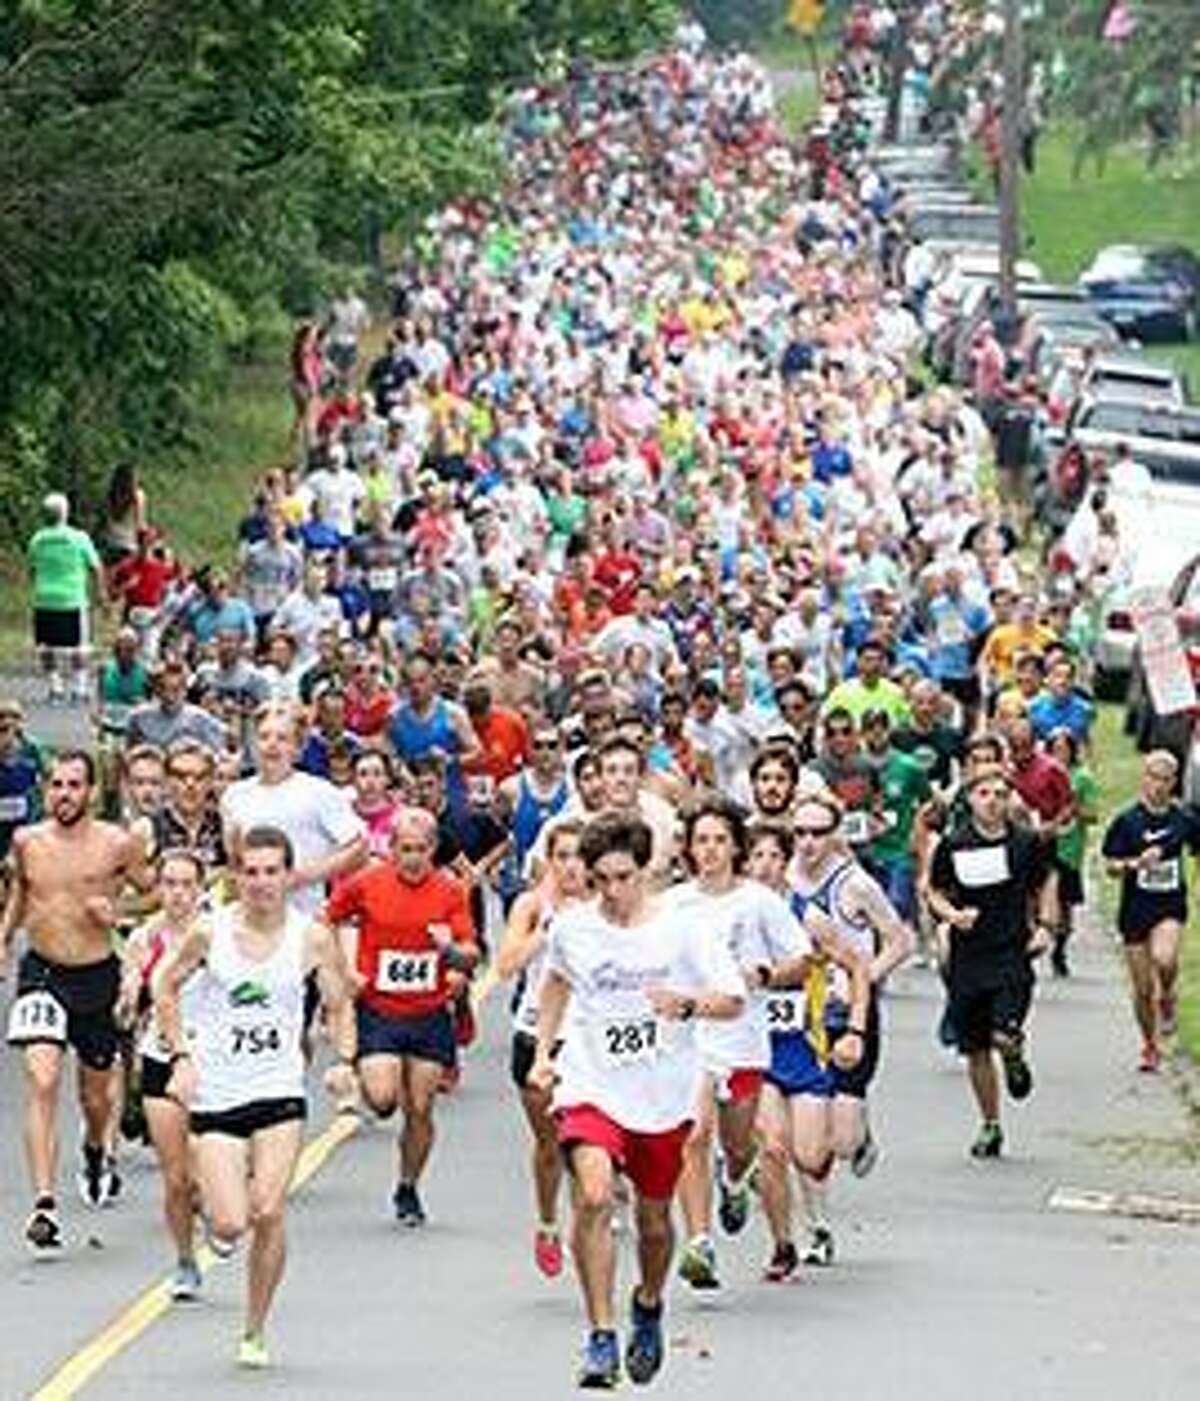 Benefit 5K road race in Newtown planned Saturday